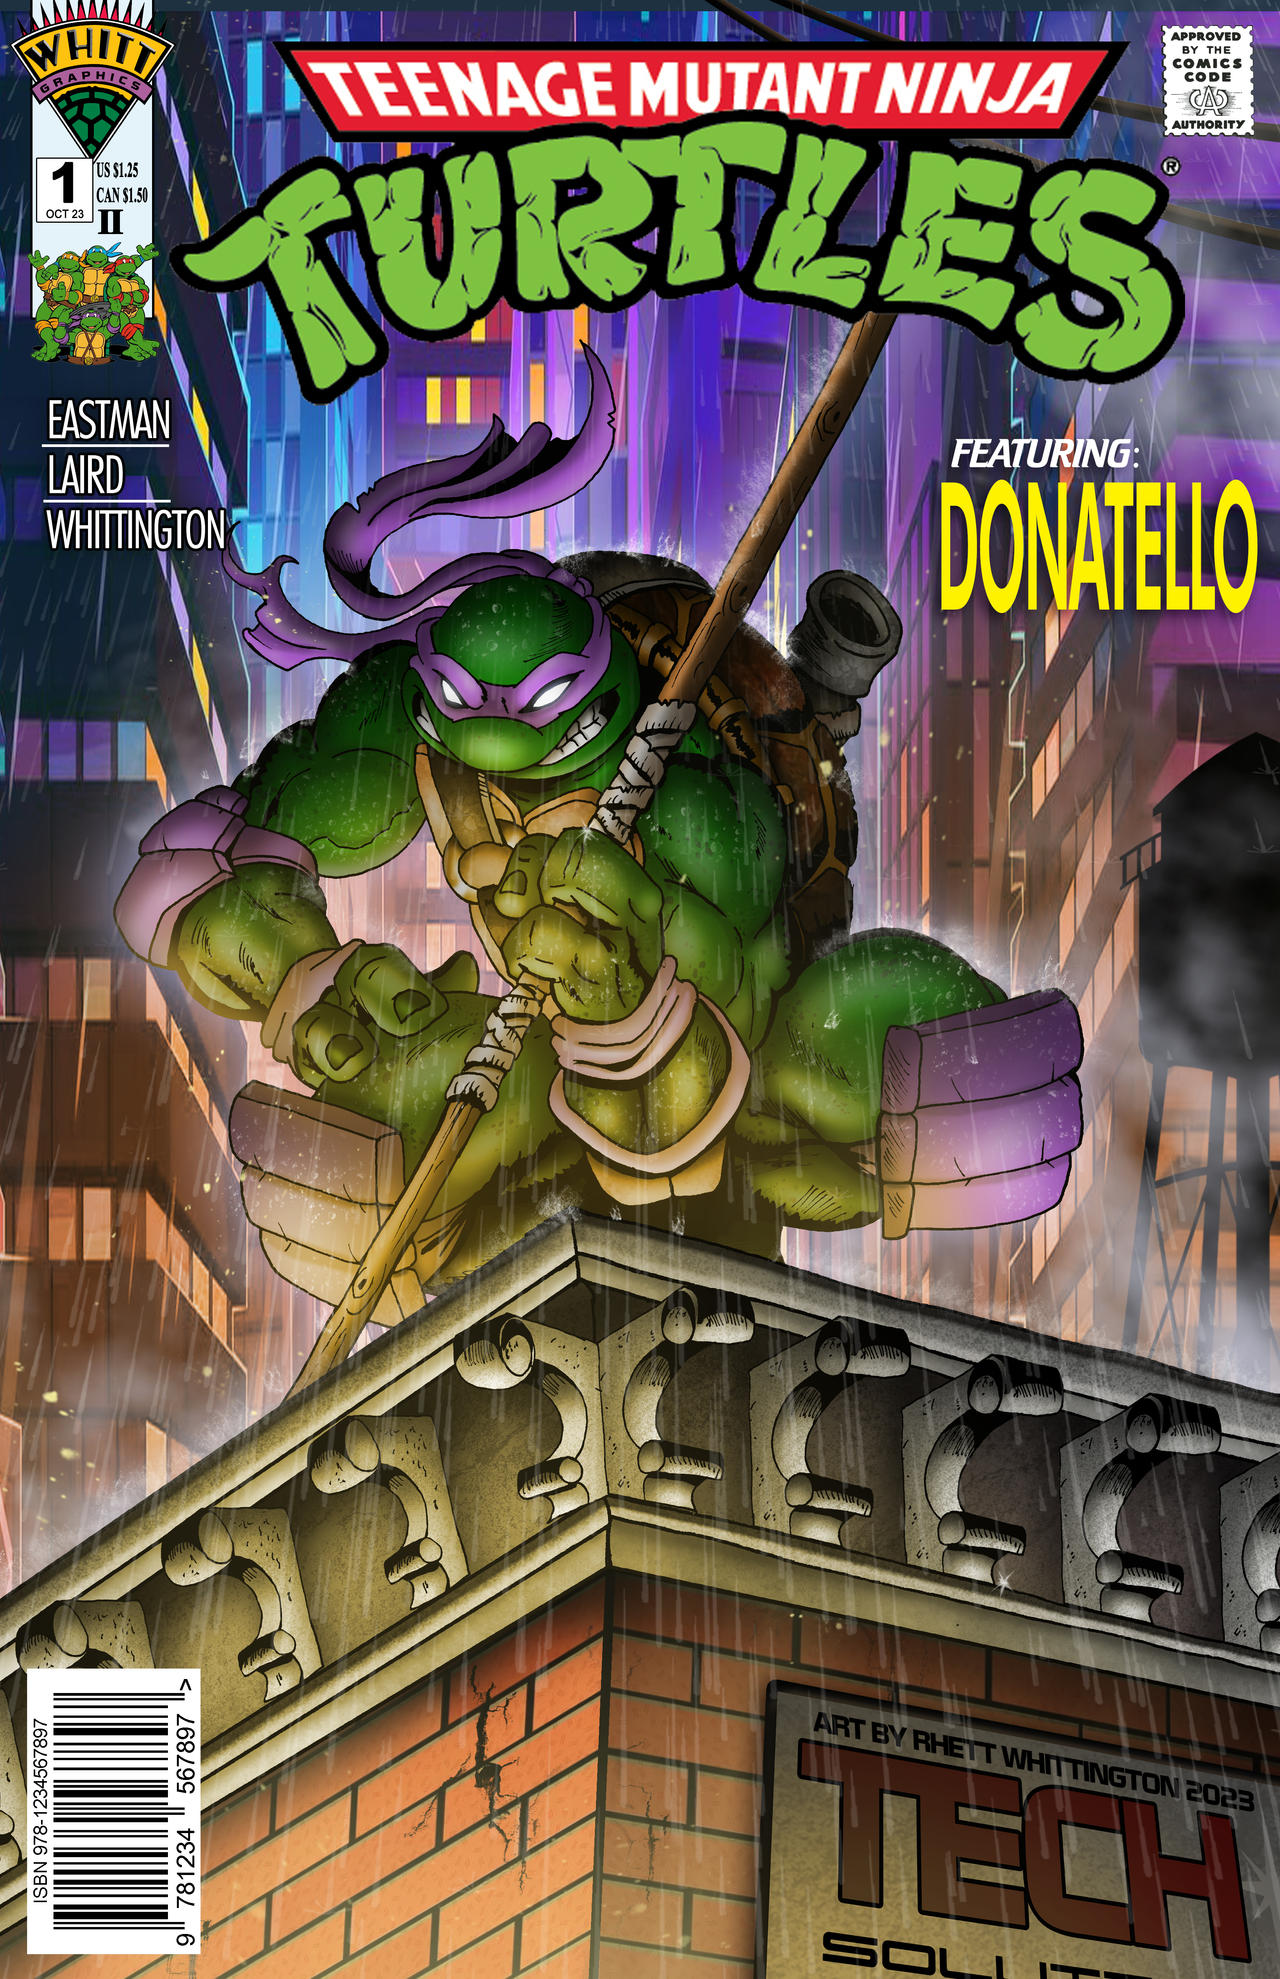 TMNT Donatello - Ninja Turtles - Posters and Art Prints